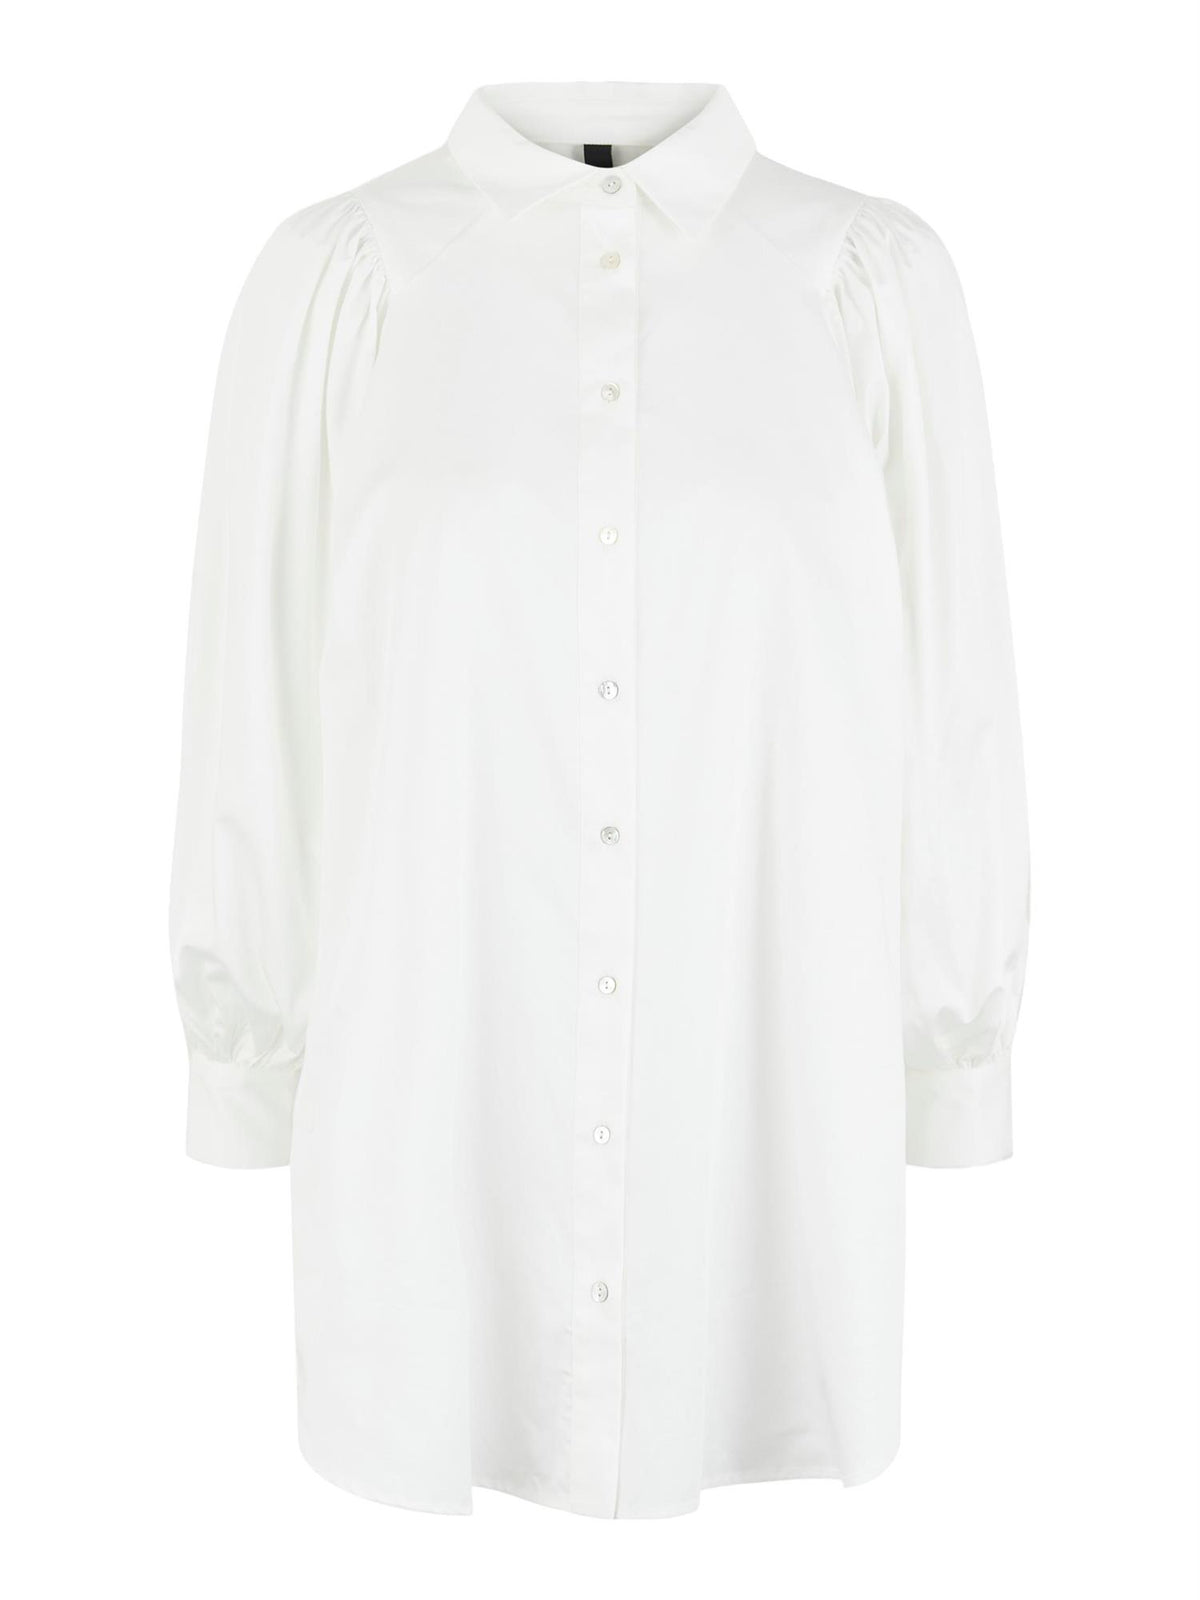 Yasevelyn 7/8 long shirt s Star White